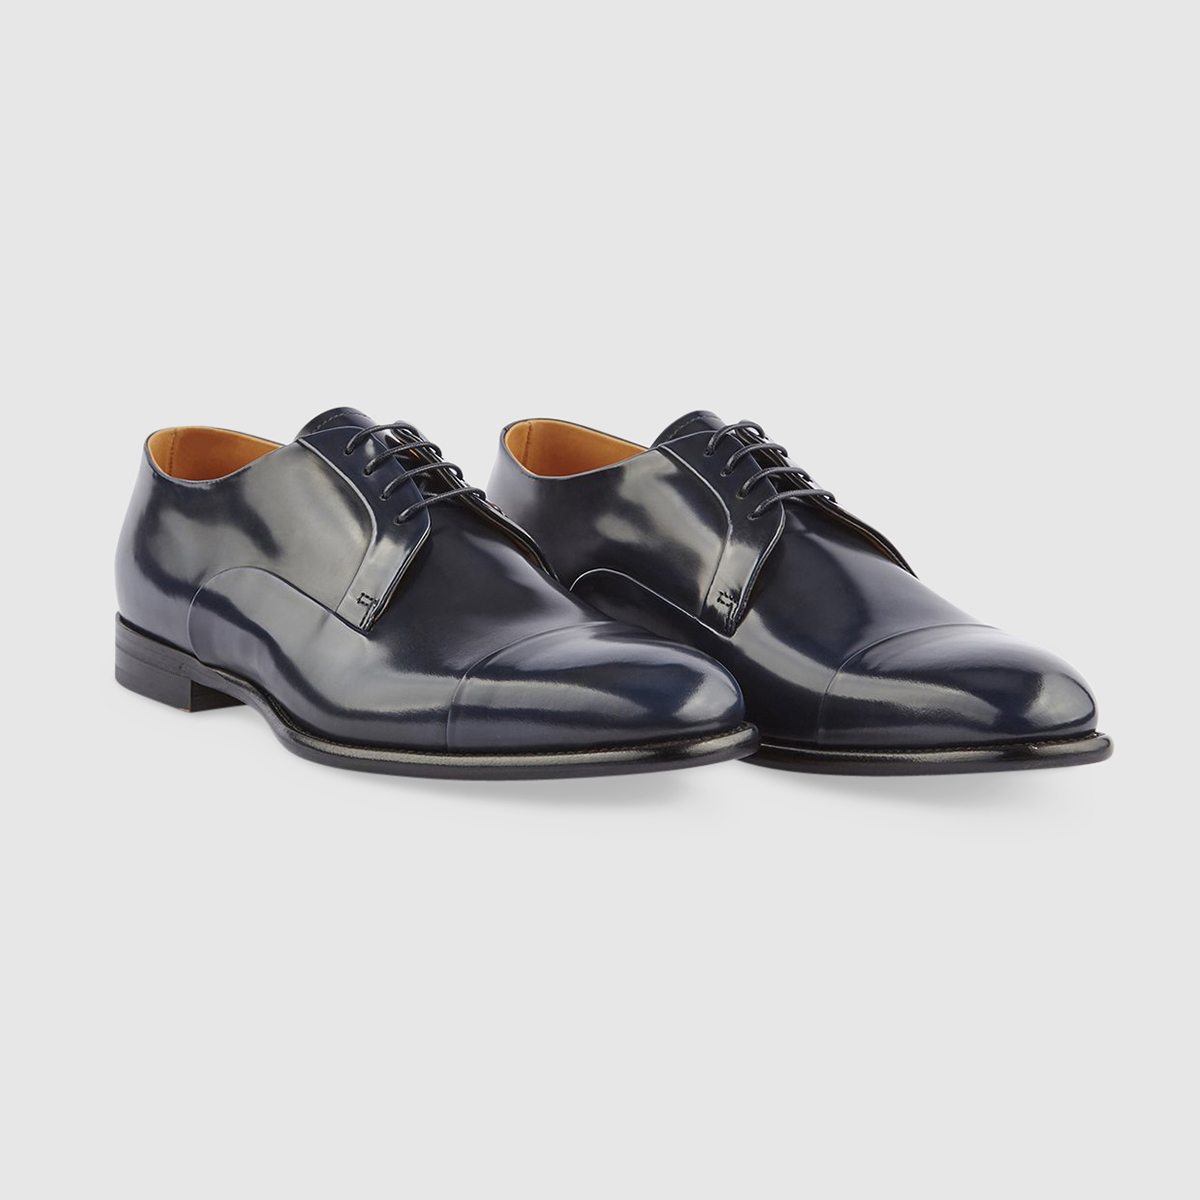 Lace Up Shoe in Dark Blue Leather Gruppo Fabi on sale 2022 2